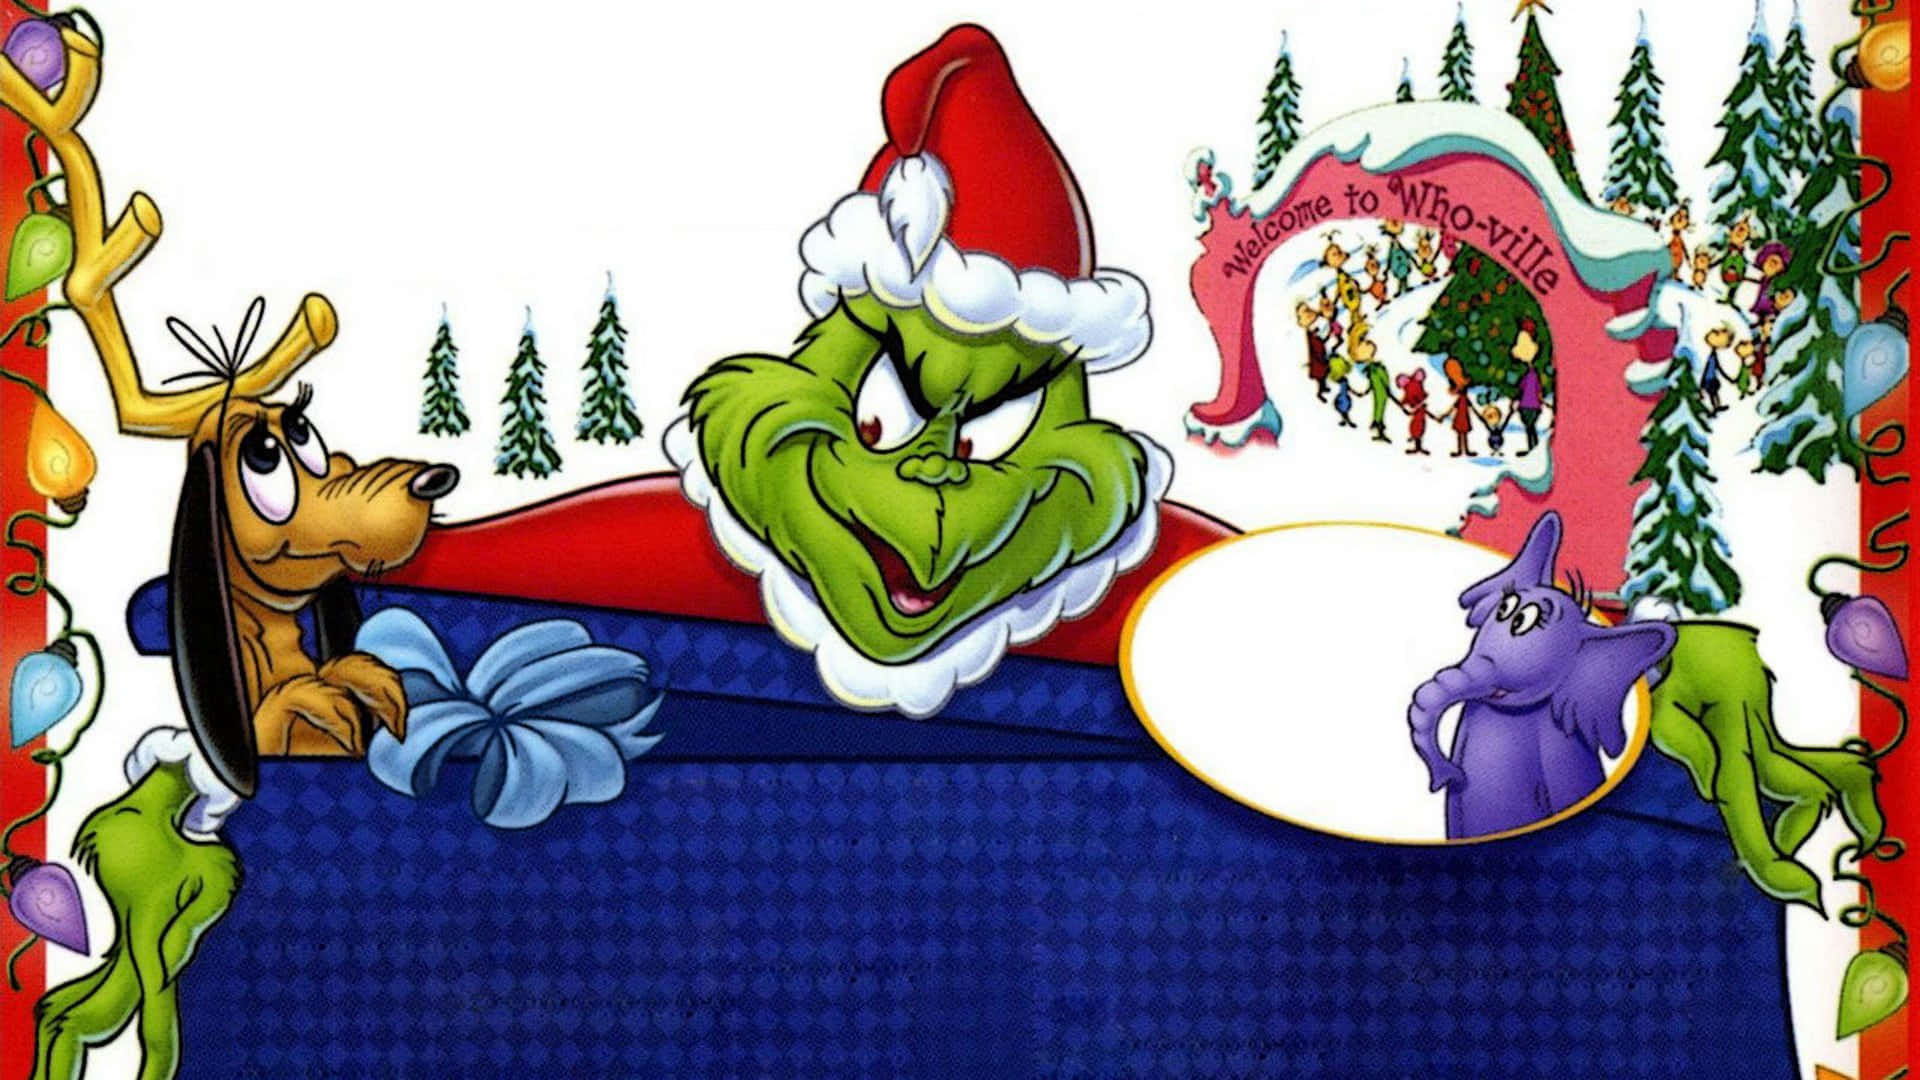 The Grinch Christmas Card